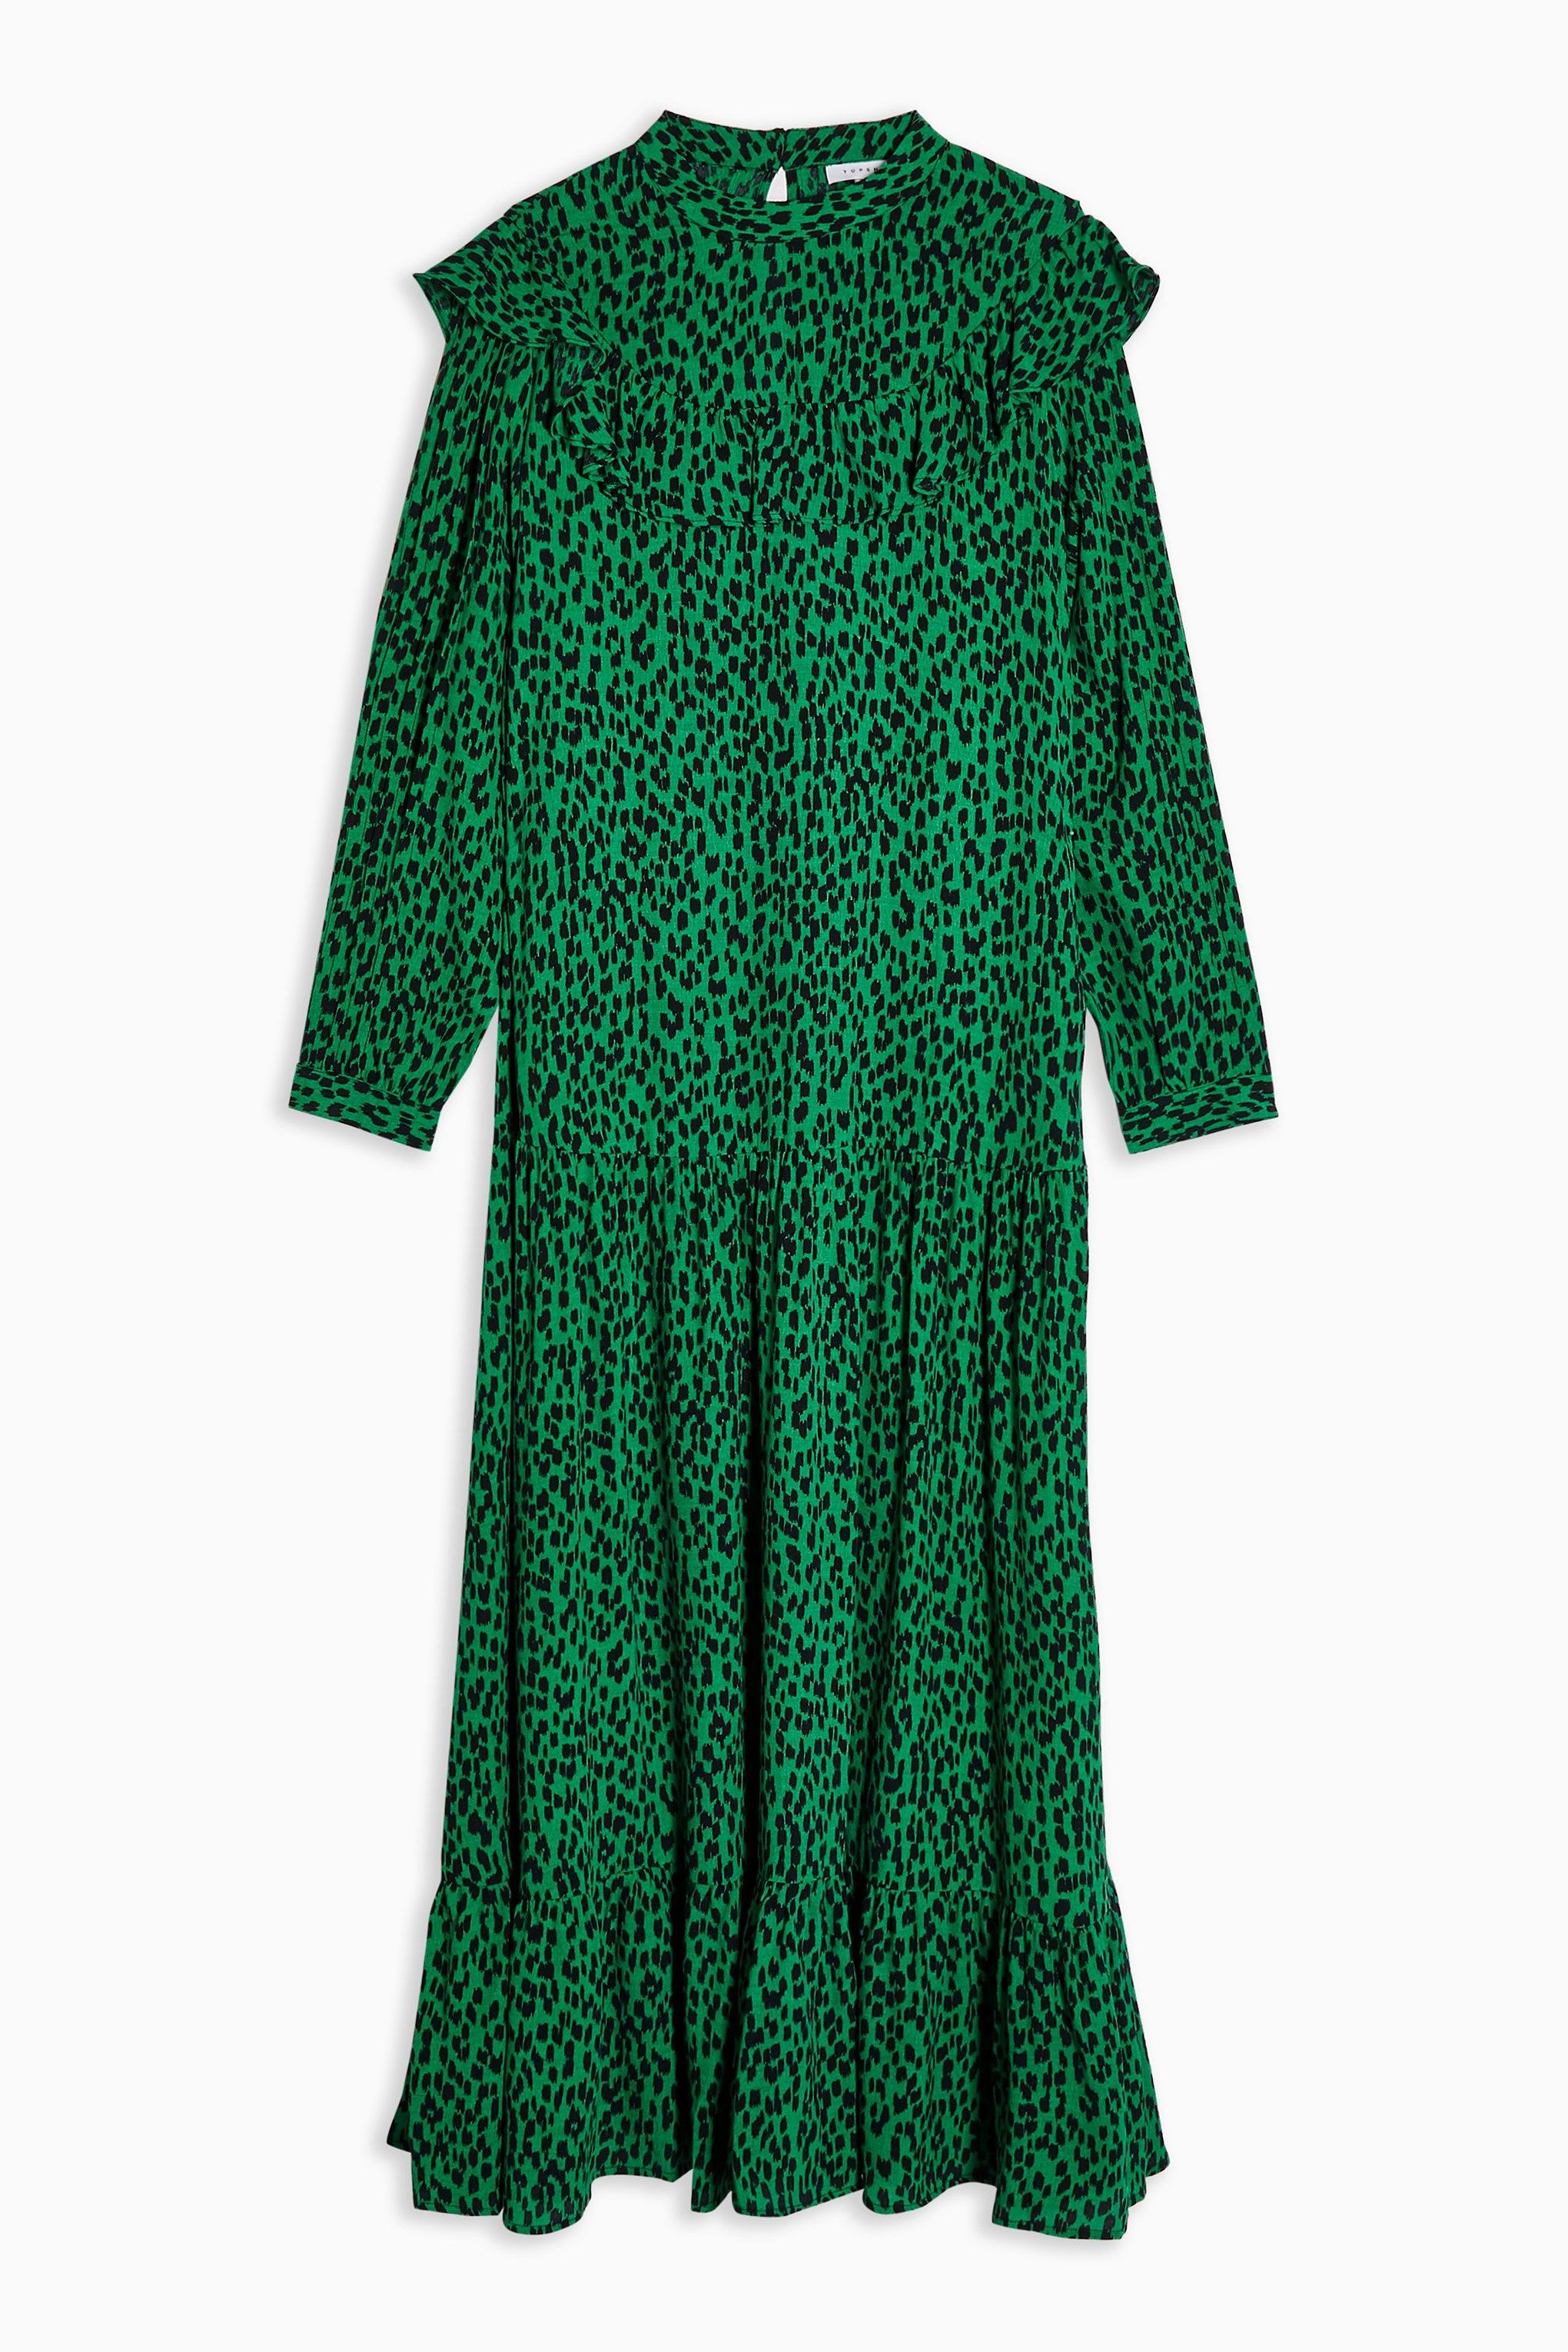 topshop green leopard print dress